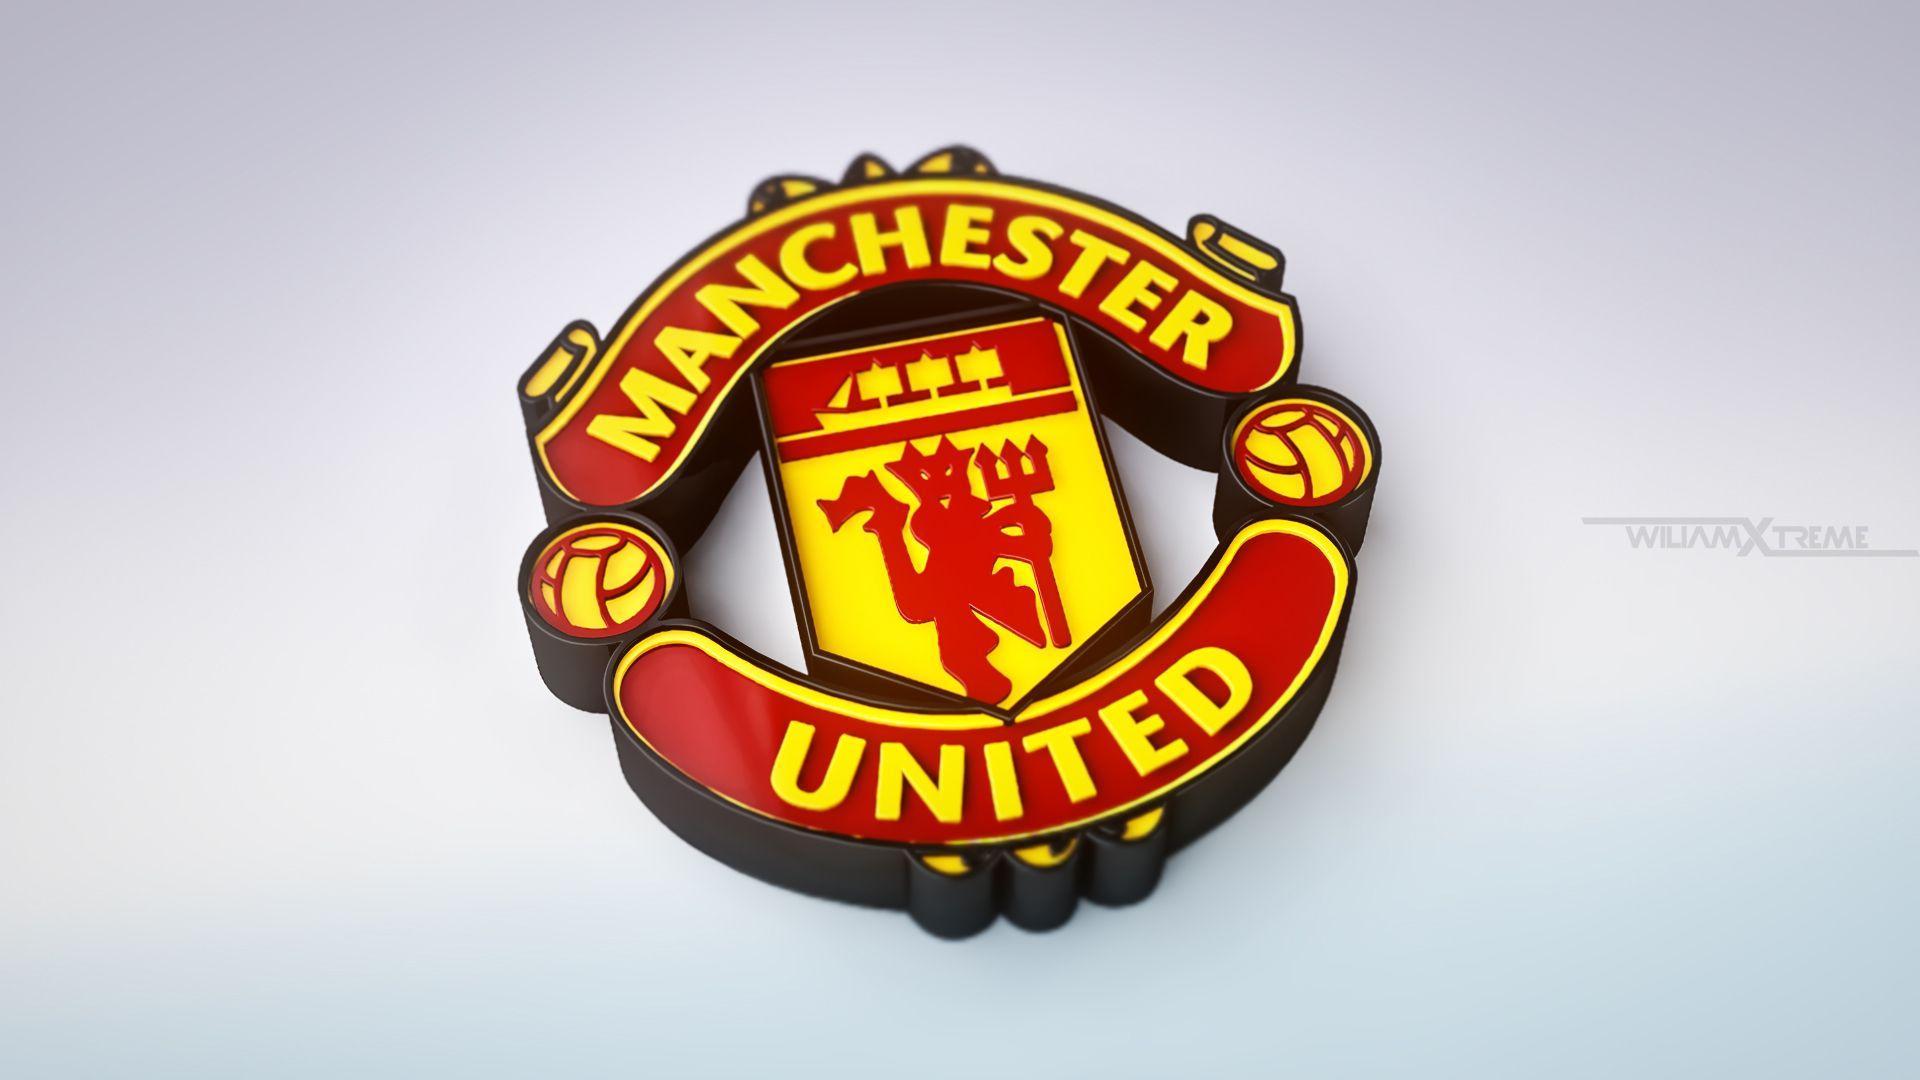 Manchester United Logo 3D Image Wallpapers Desktop Backgrounds Free